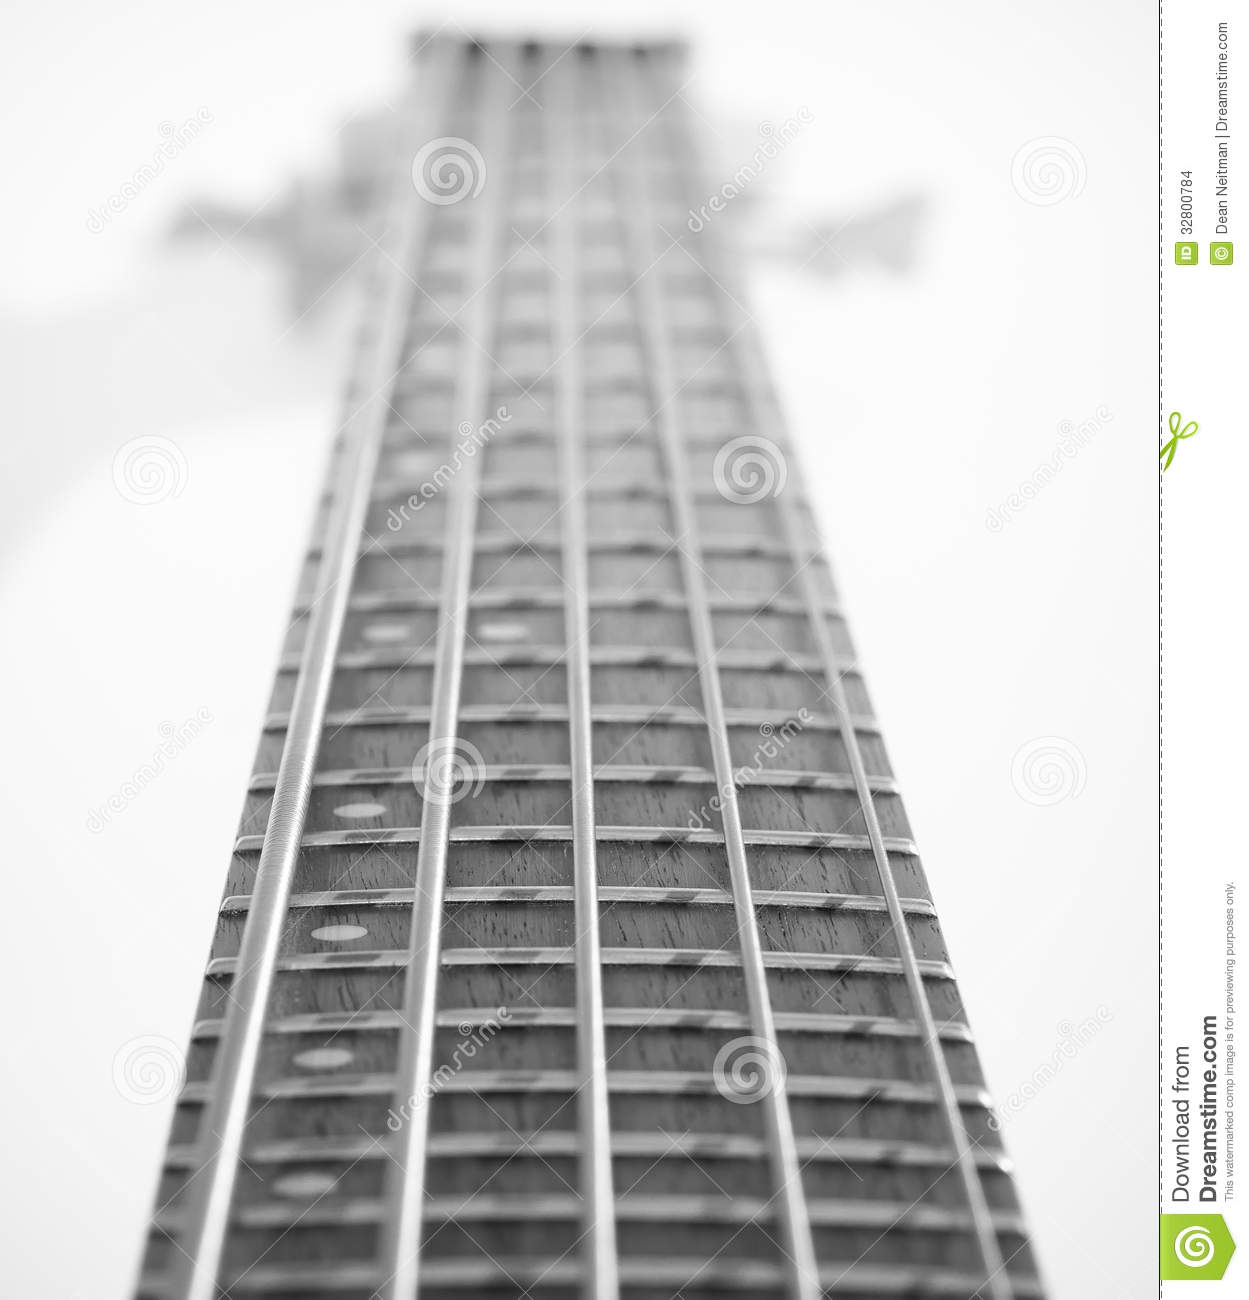 Guitar fretboard clipart 